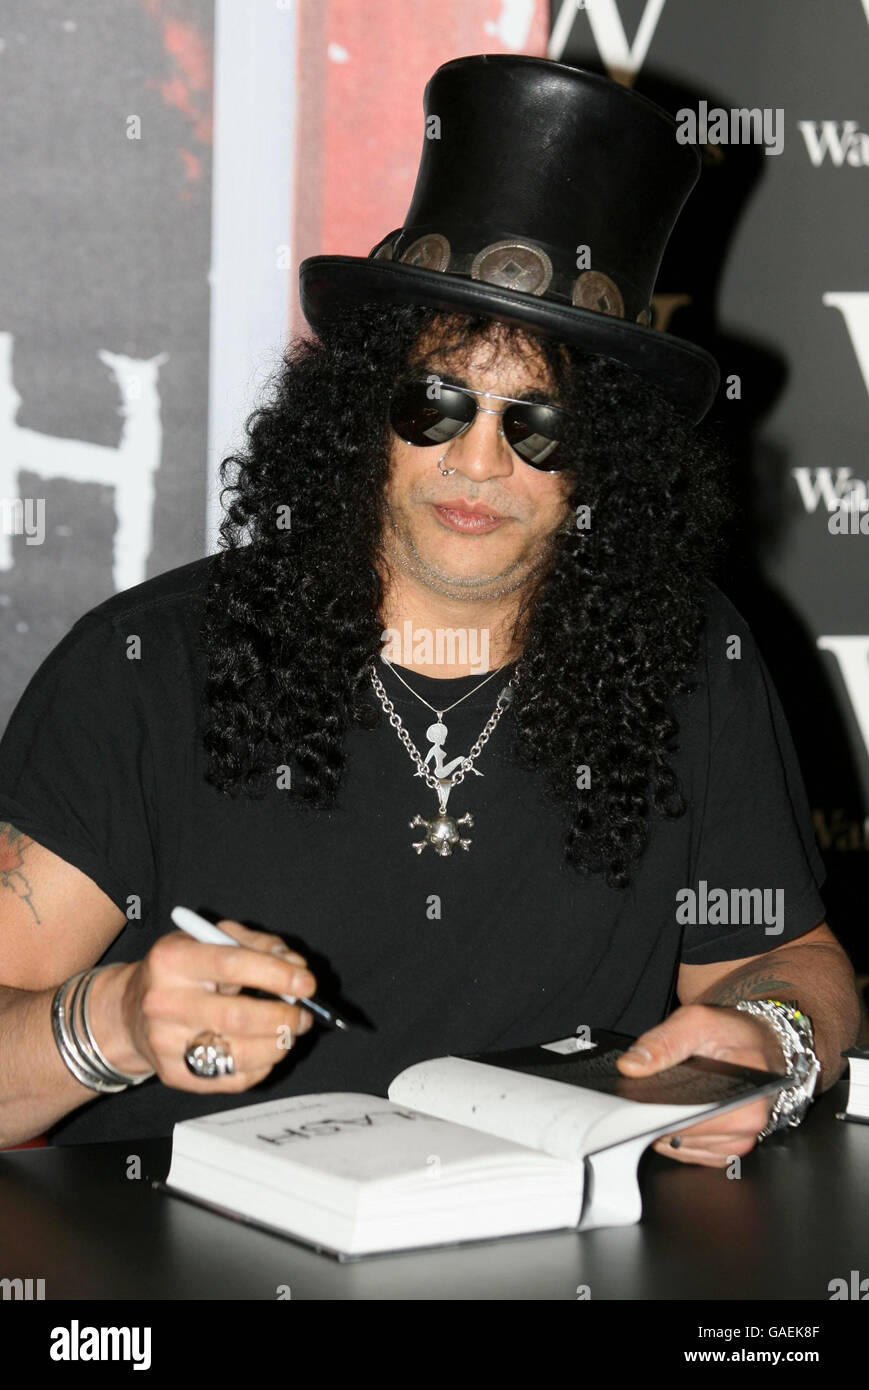 L'ex chitarrista Guns N' Roses Slash firma copie della sua autobiografia ' Slash' a Waterstone's a Piccadilly, Londra Foto stock - Alamy